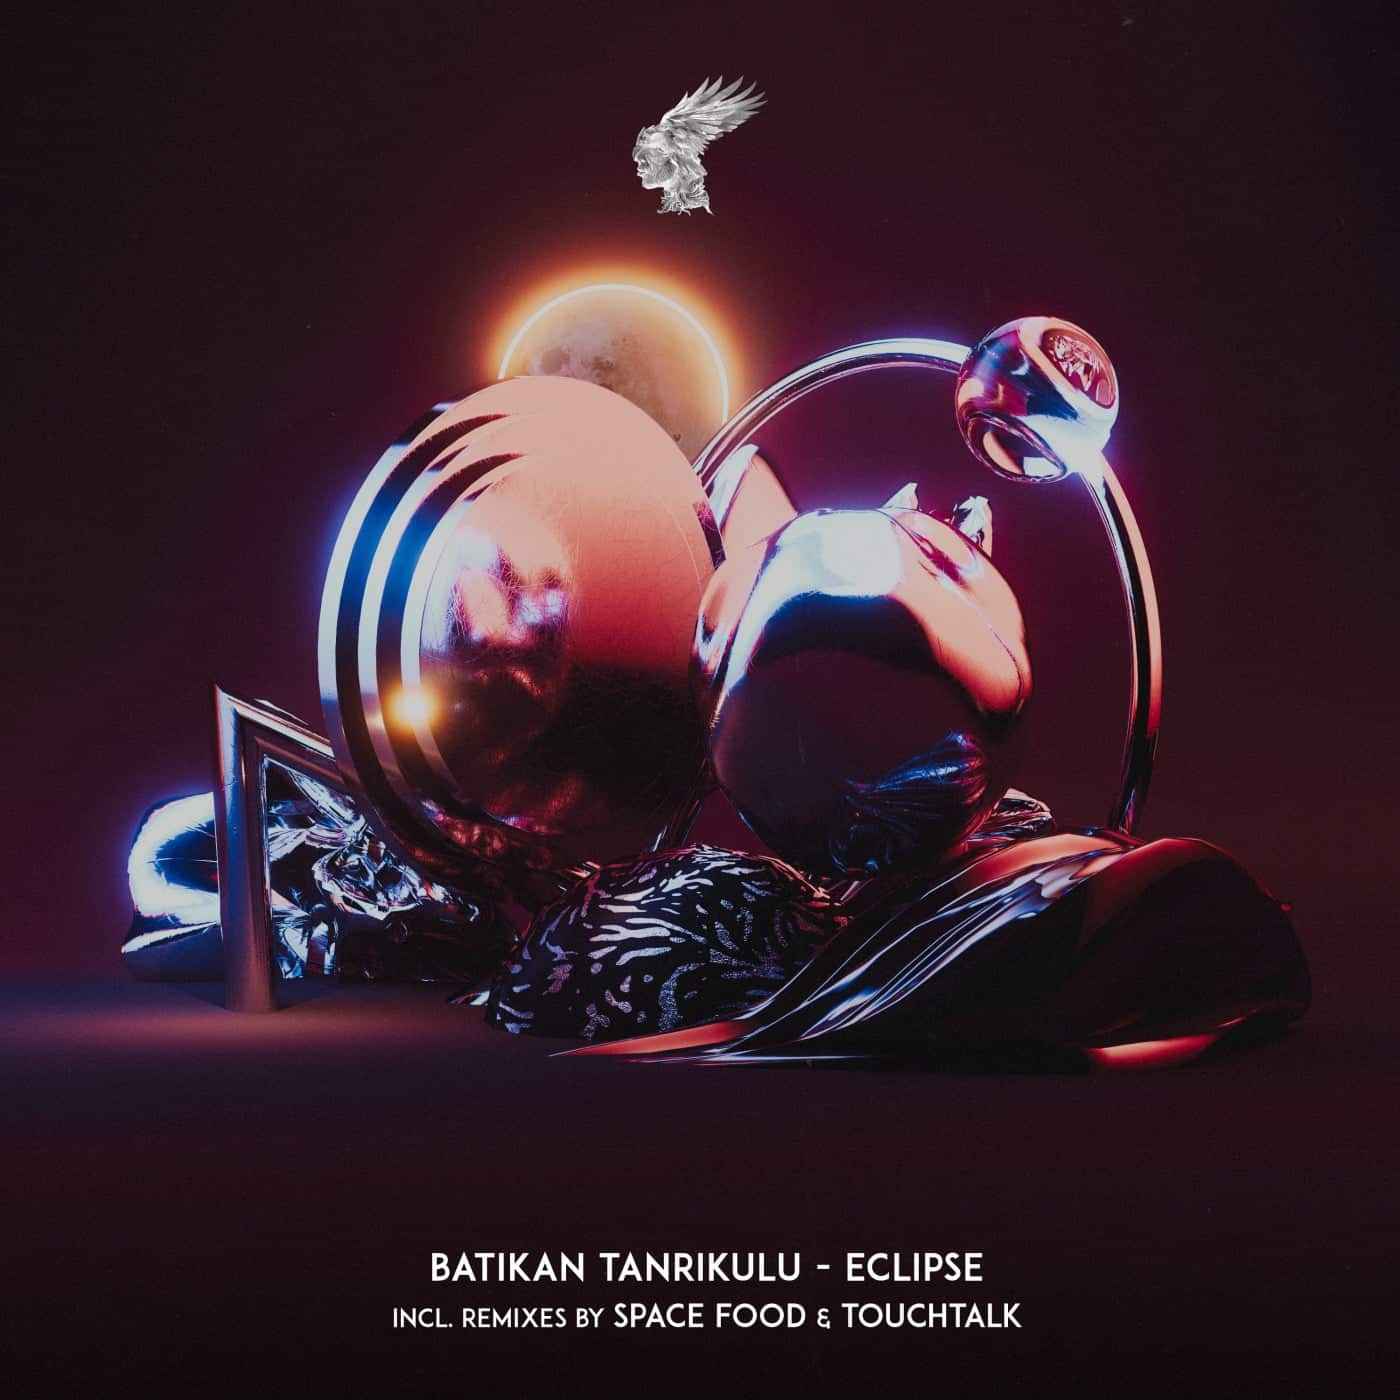 Download Batikan Tanrikulu - Eclipse on Electrobuzz